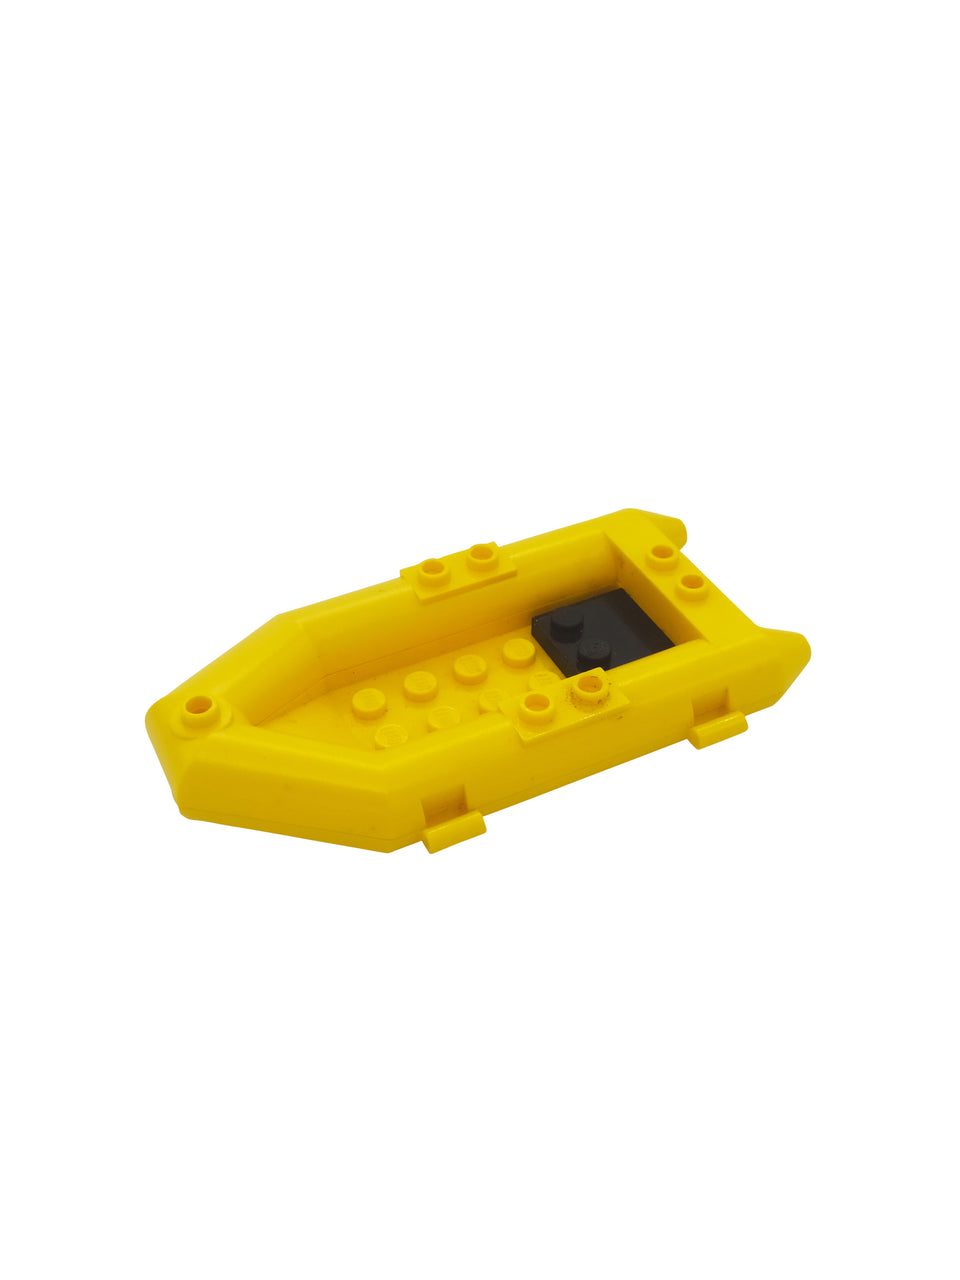 lego yellow boat